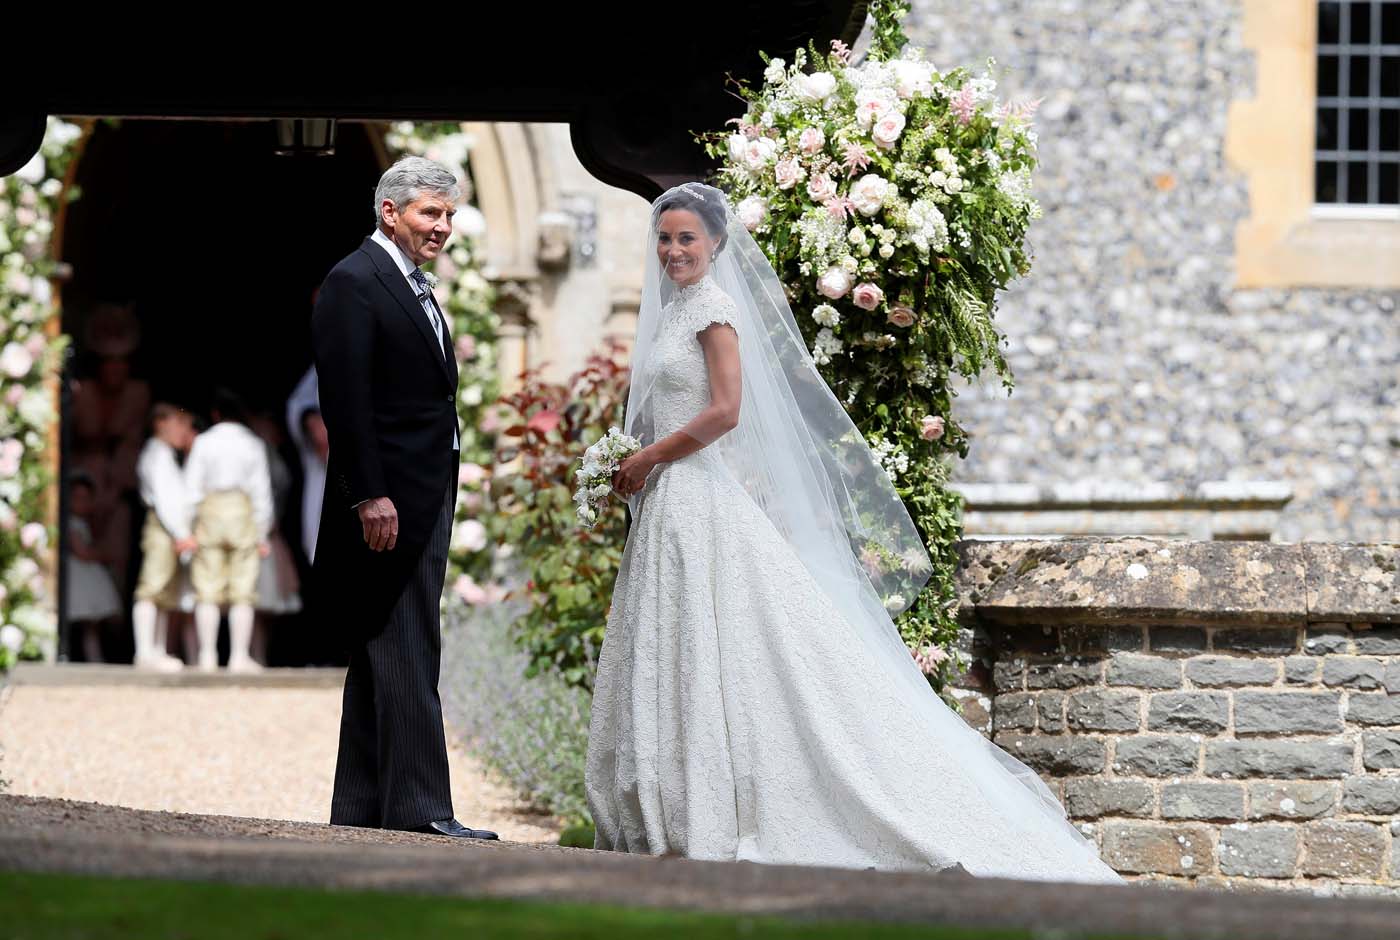 La gran boda de Pippa Middleton y James Matthews (fotos)